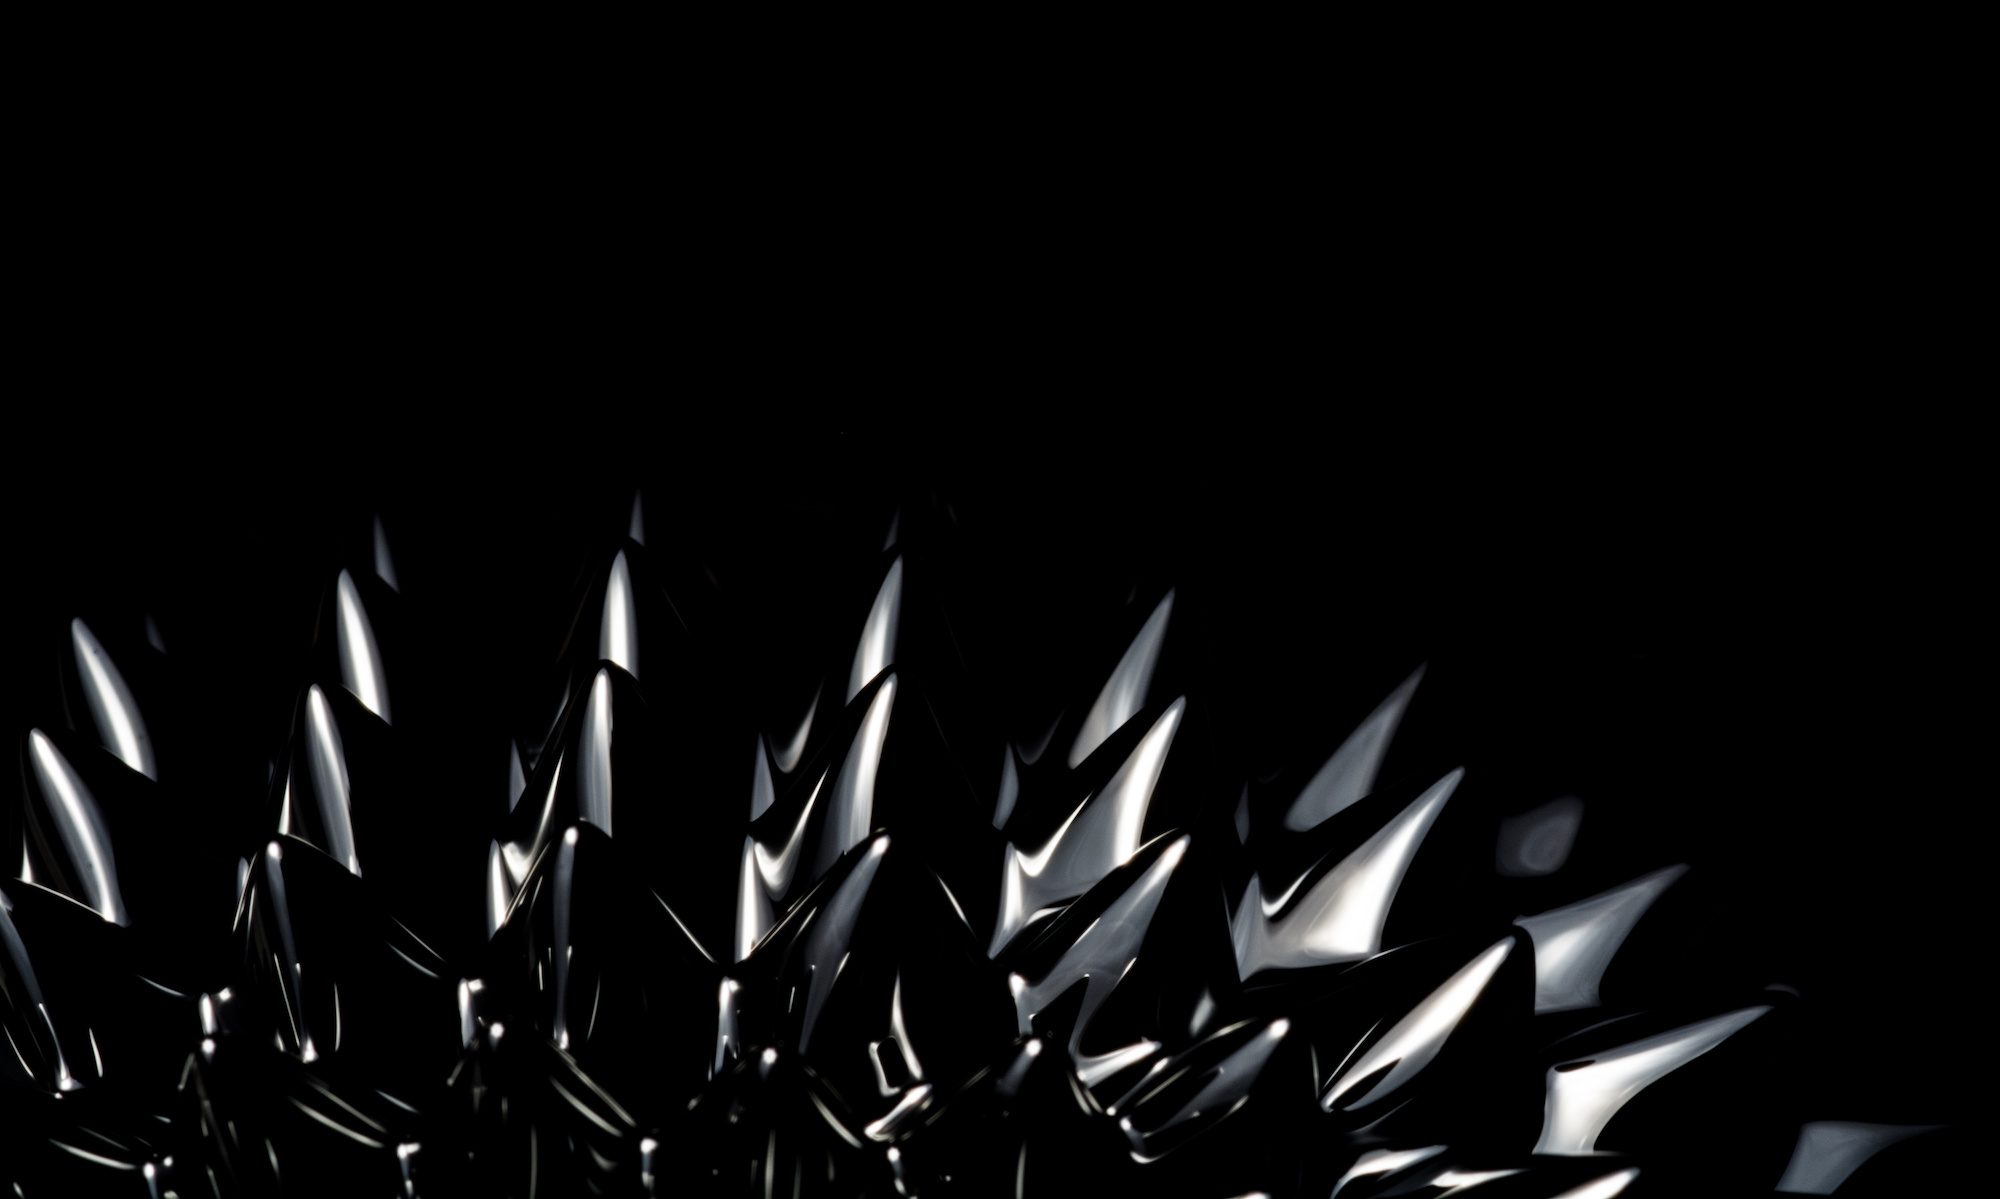 ferrofluid with nanomagnets